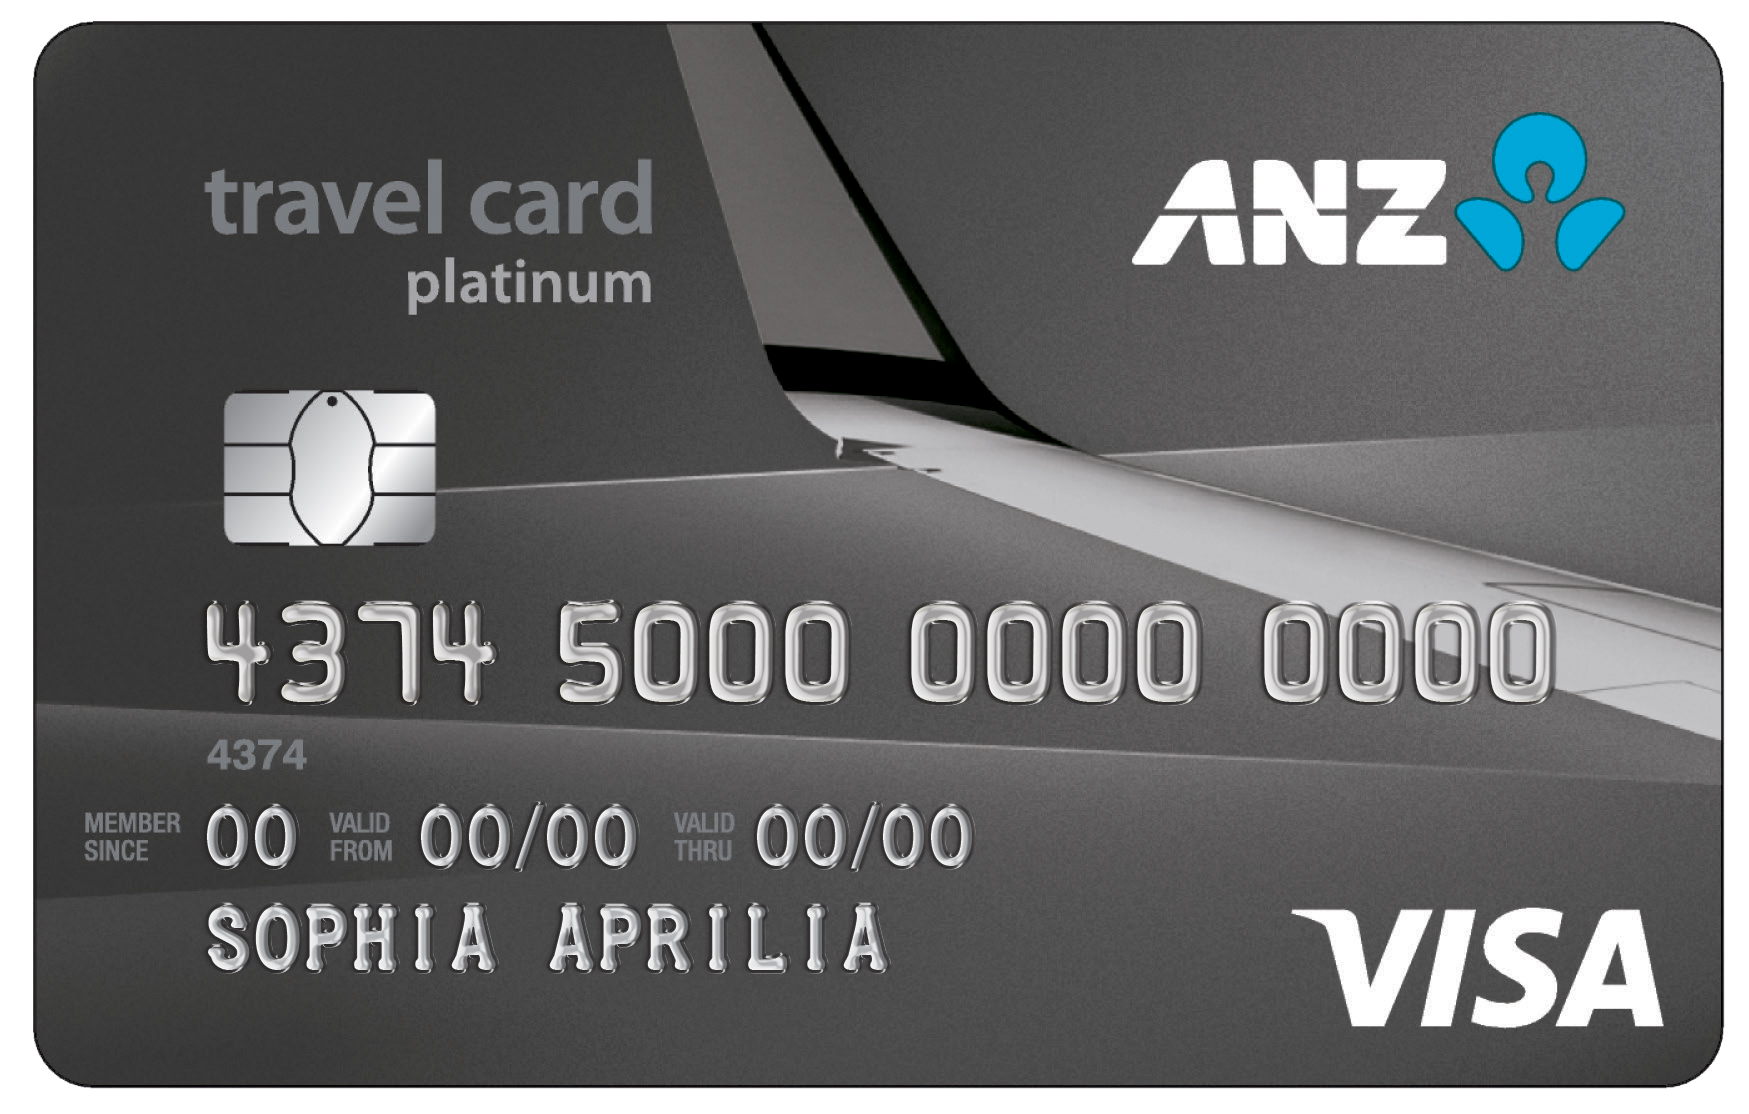 anz travel card check balance